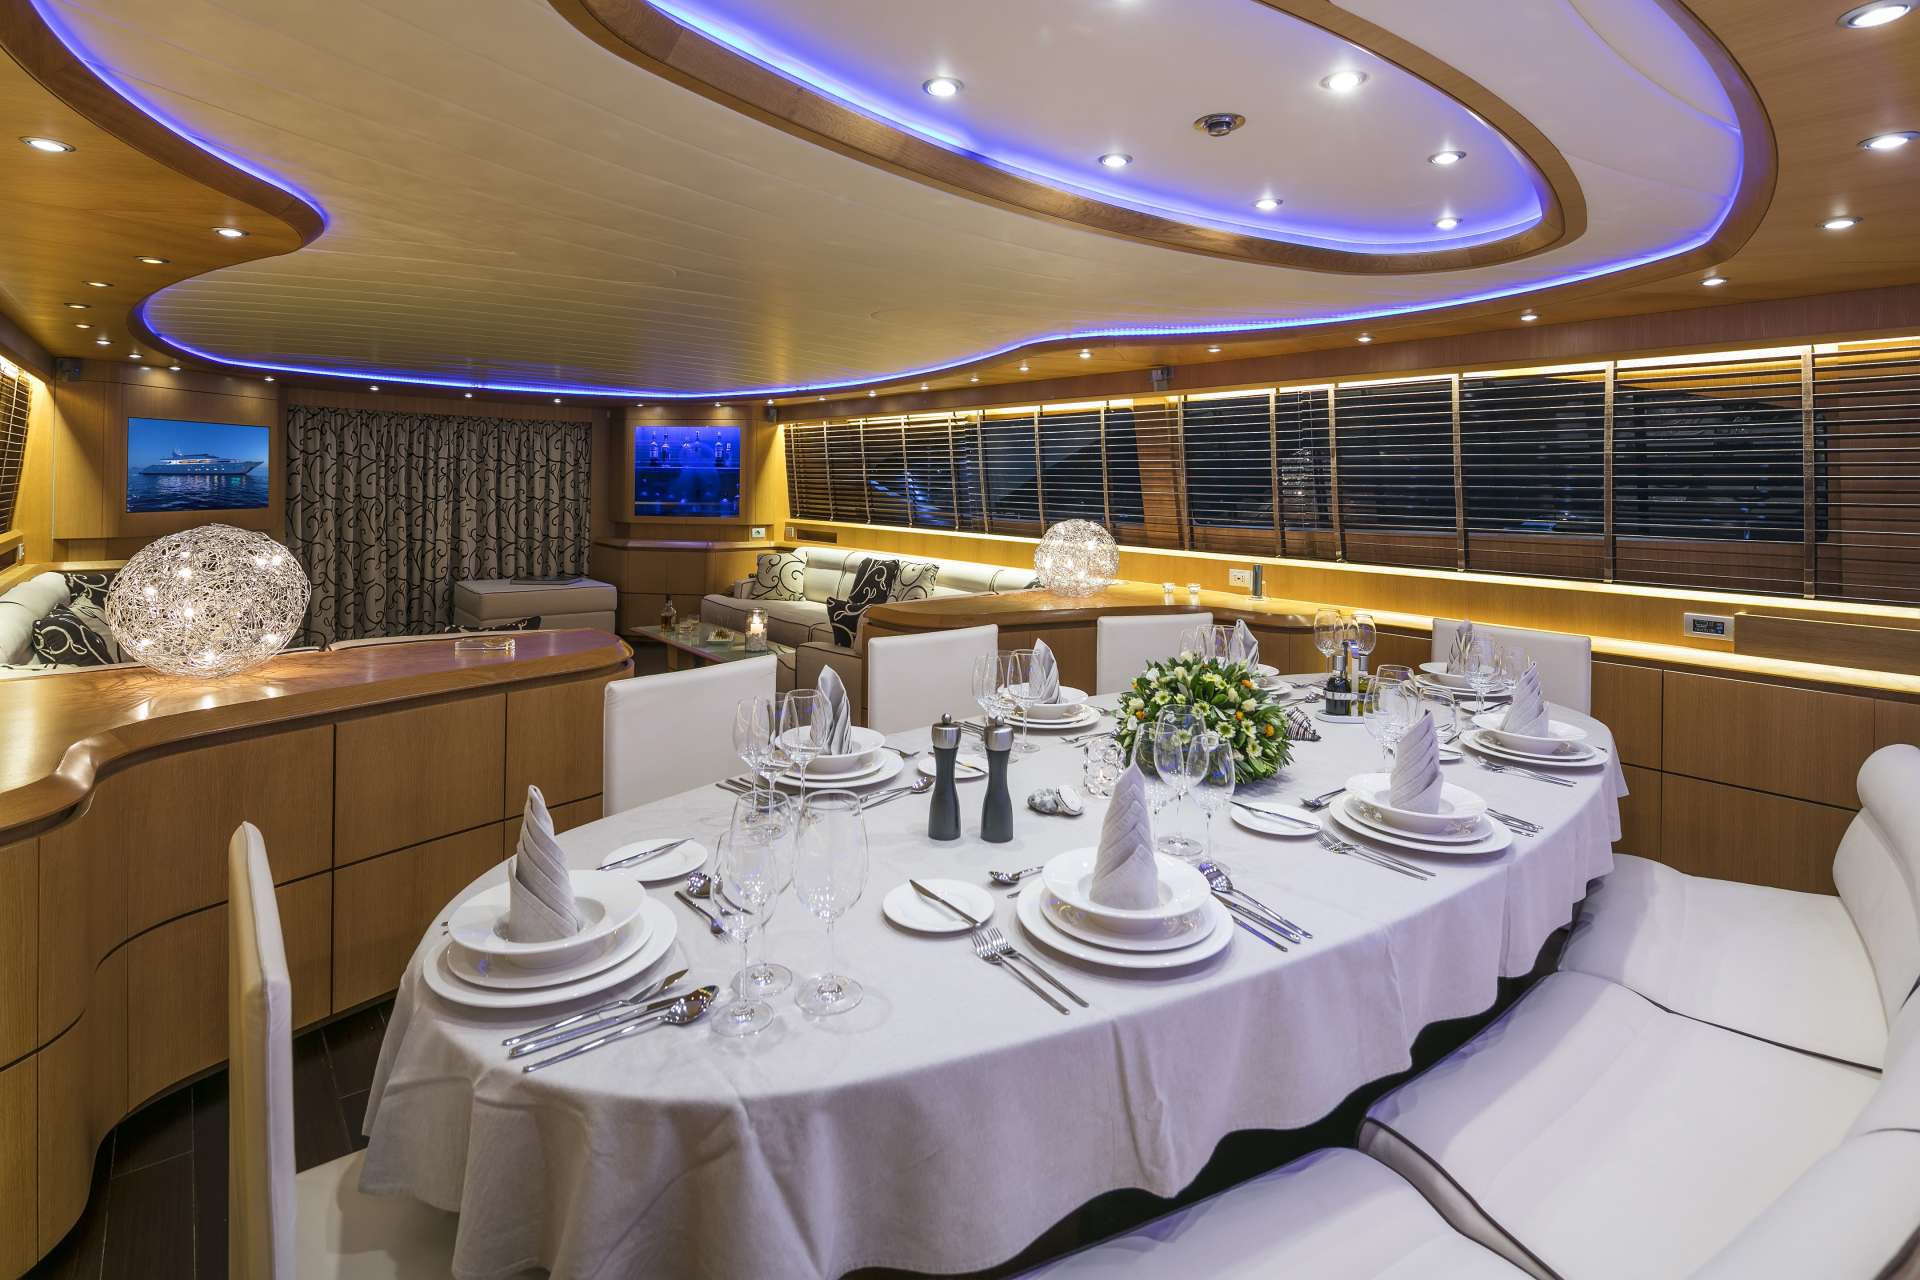 Motor Yacht 'PARIS A' Dining area, 12 PAX, 6 Crew, 115.00 Ft, 35.06 Meters, Built 2009, Majora, Refit Year 2013